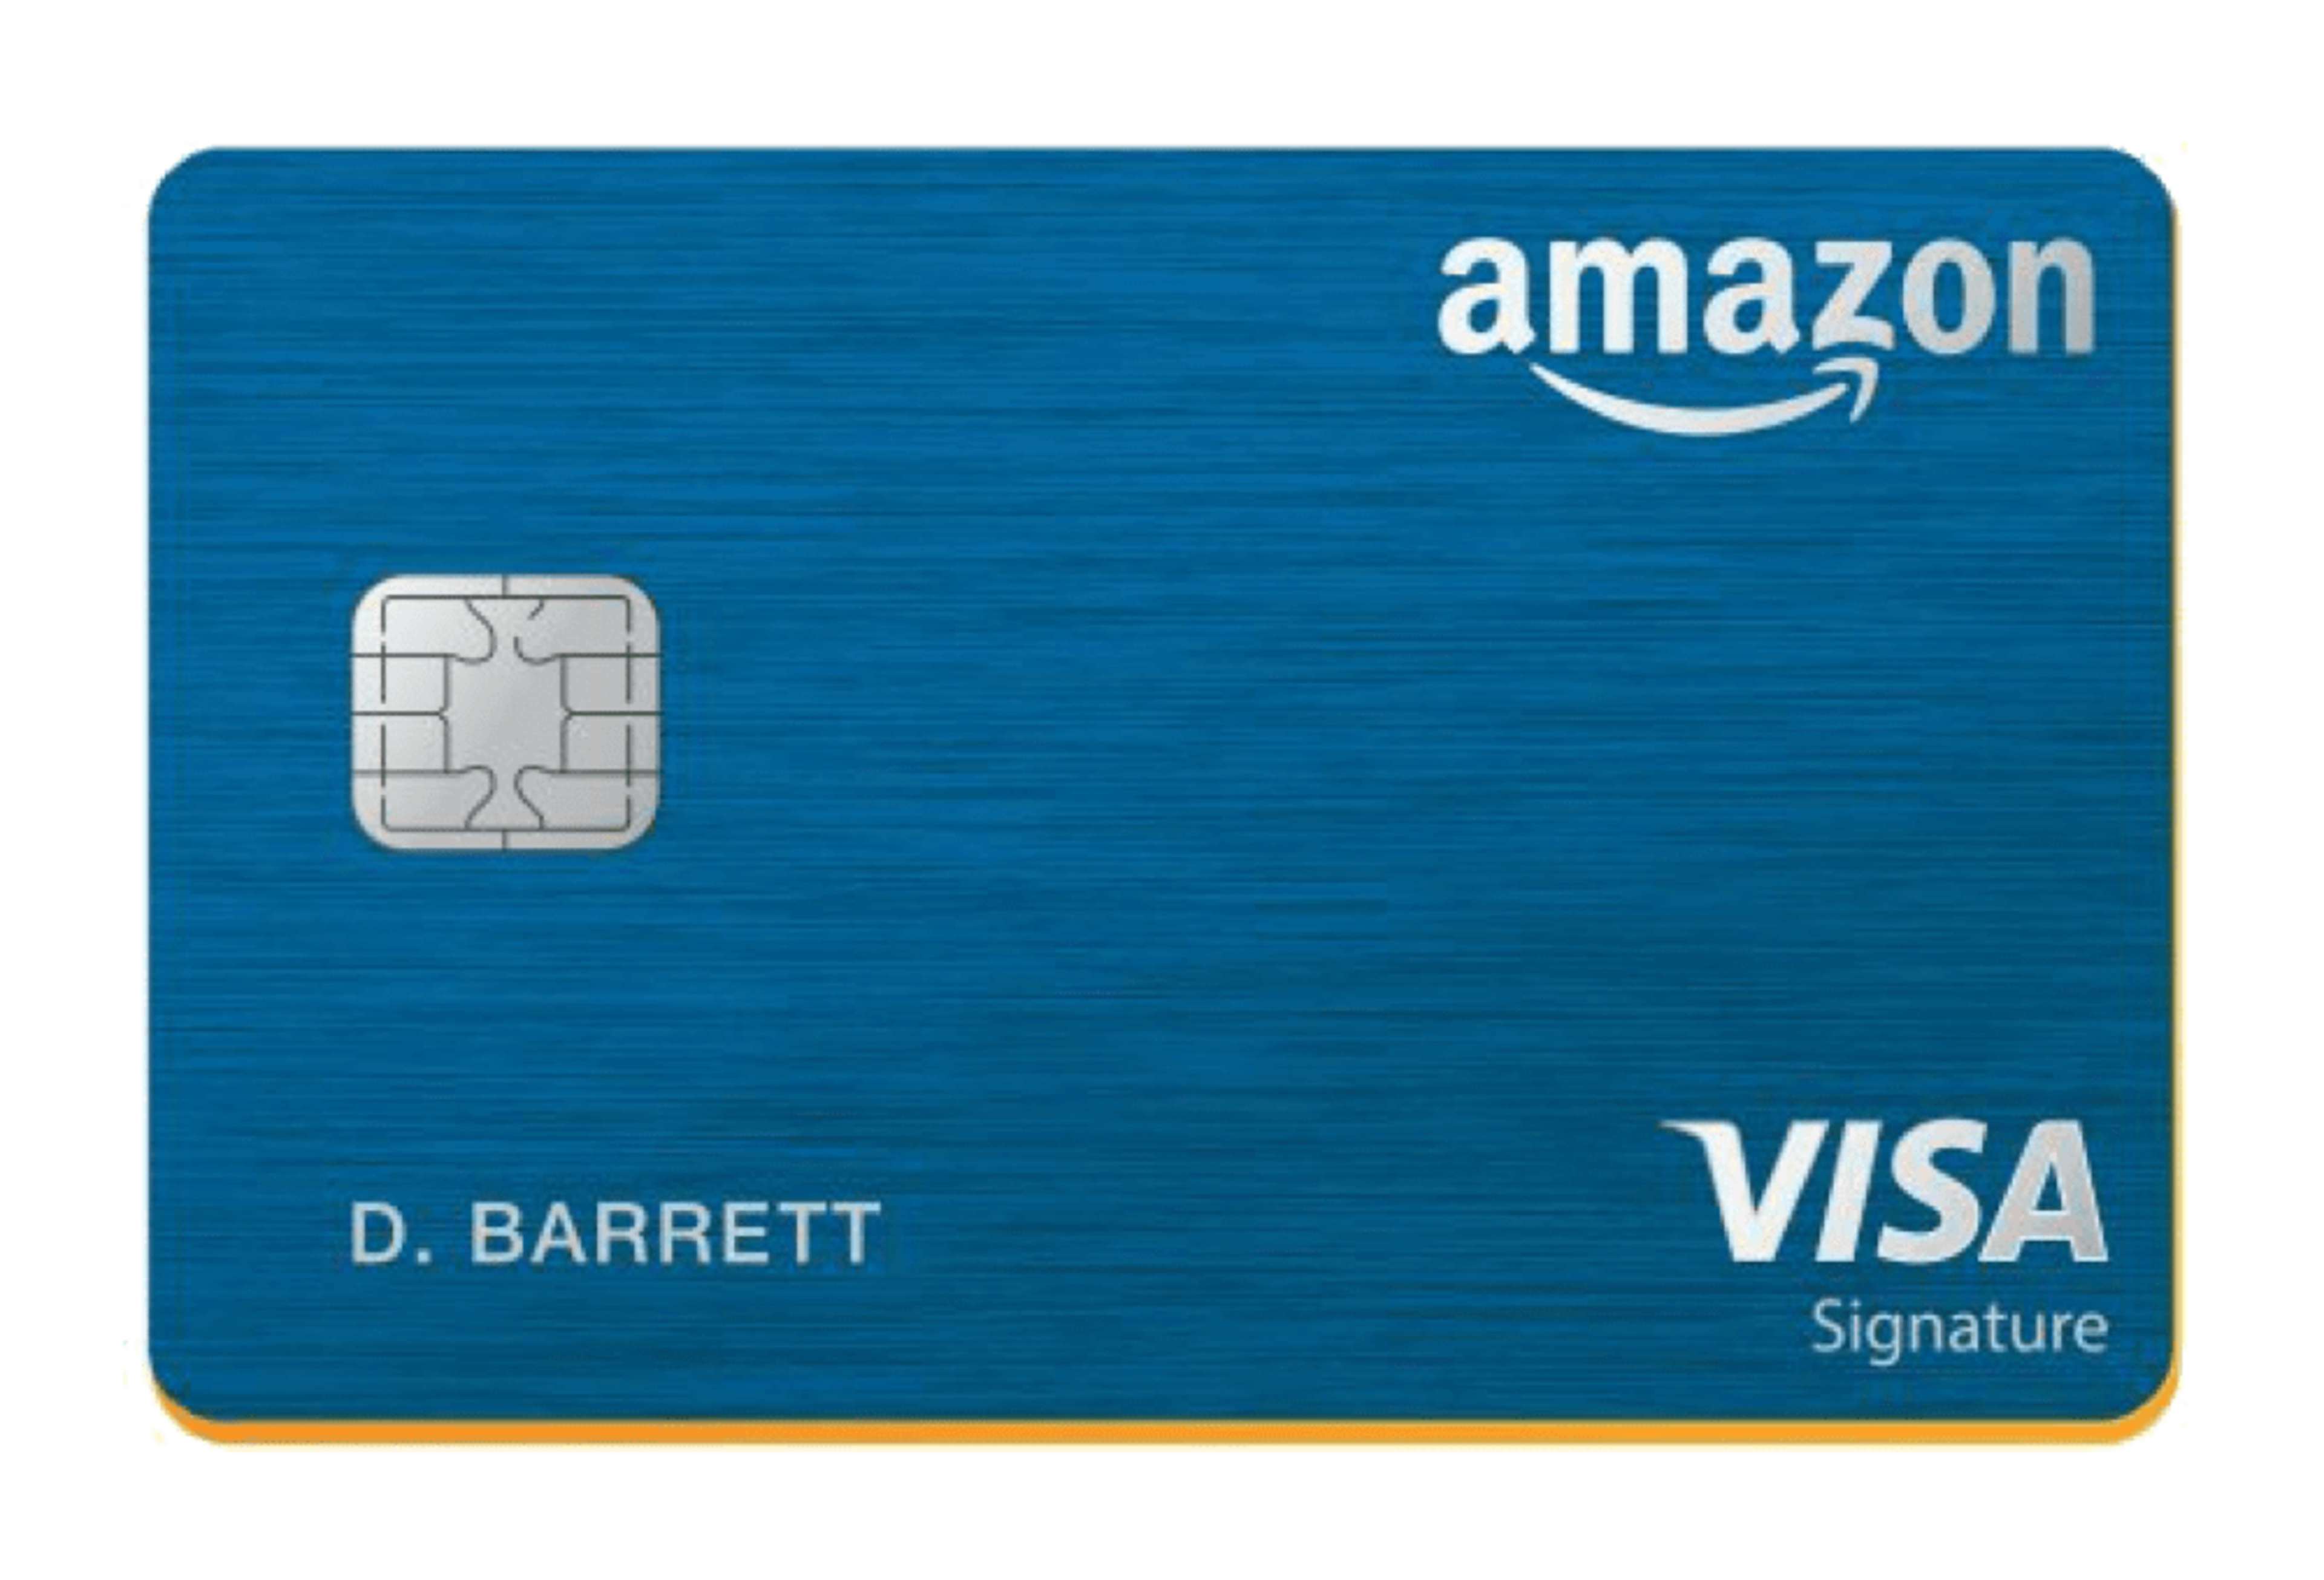 Amazon Rewards Visa Signature Card Managed by Tally.